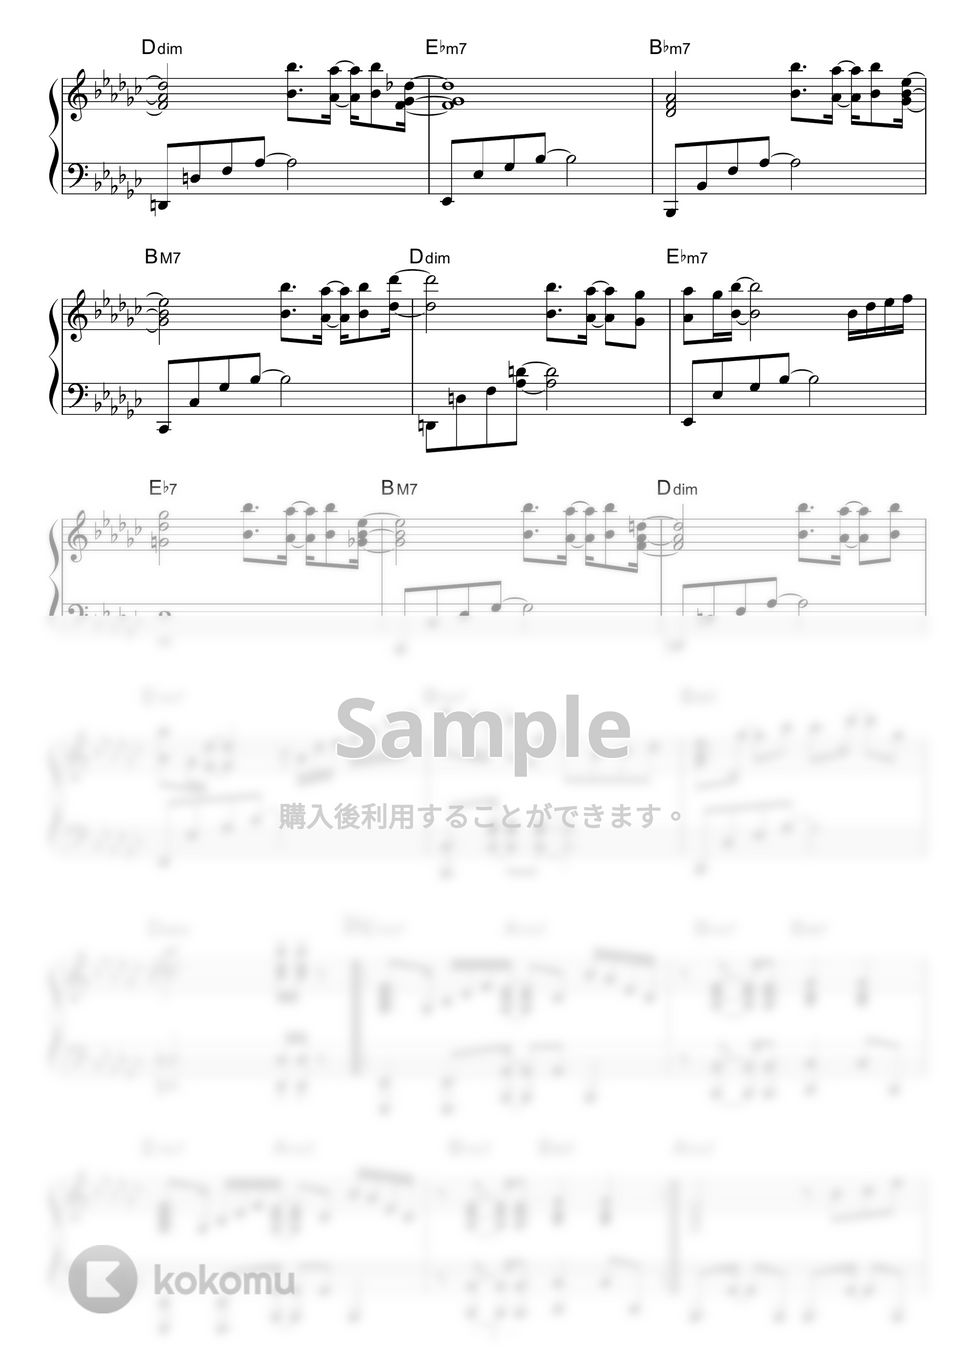 Bohemianvoodoo - Golden Forest by piano*score